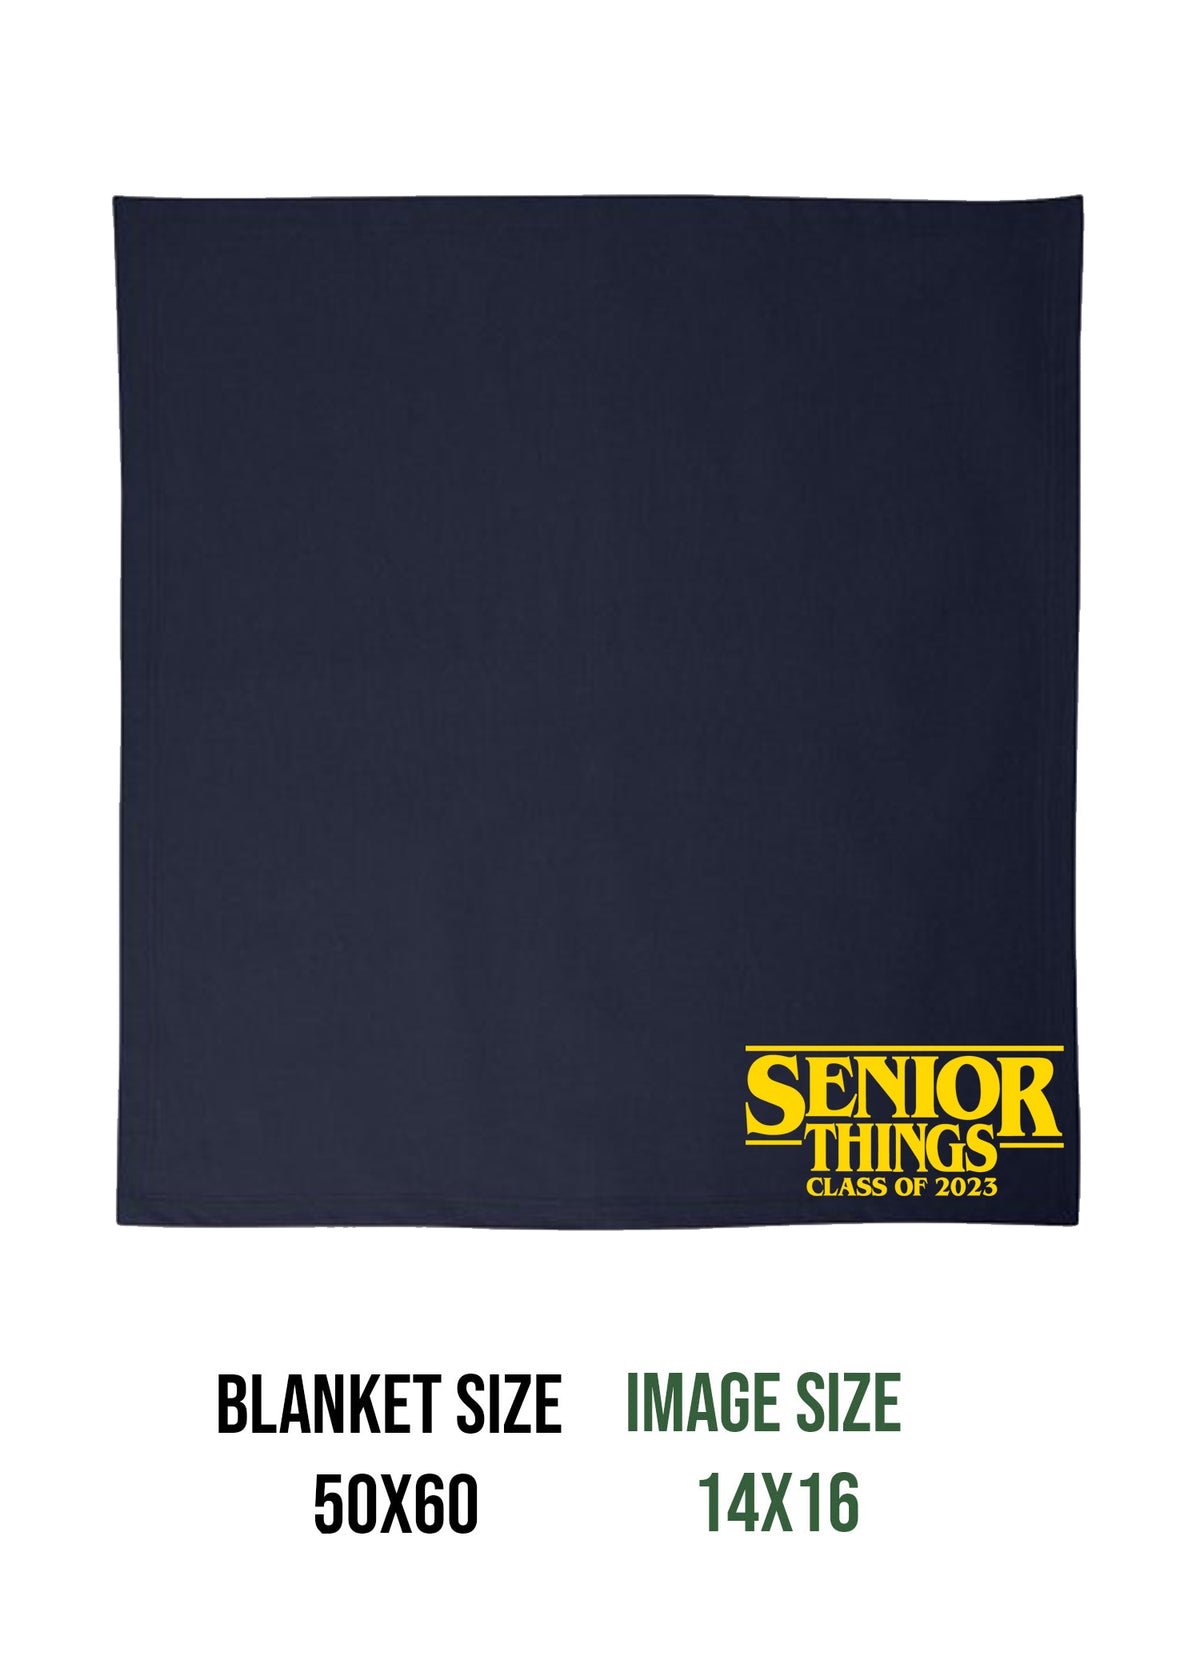 VTHS Design 3 Blanket